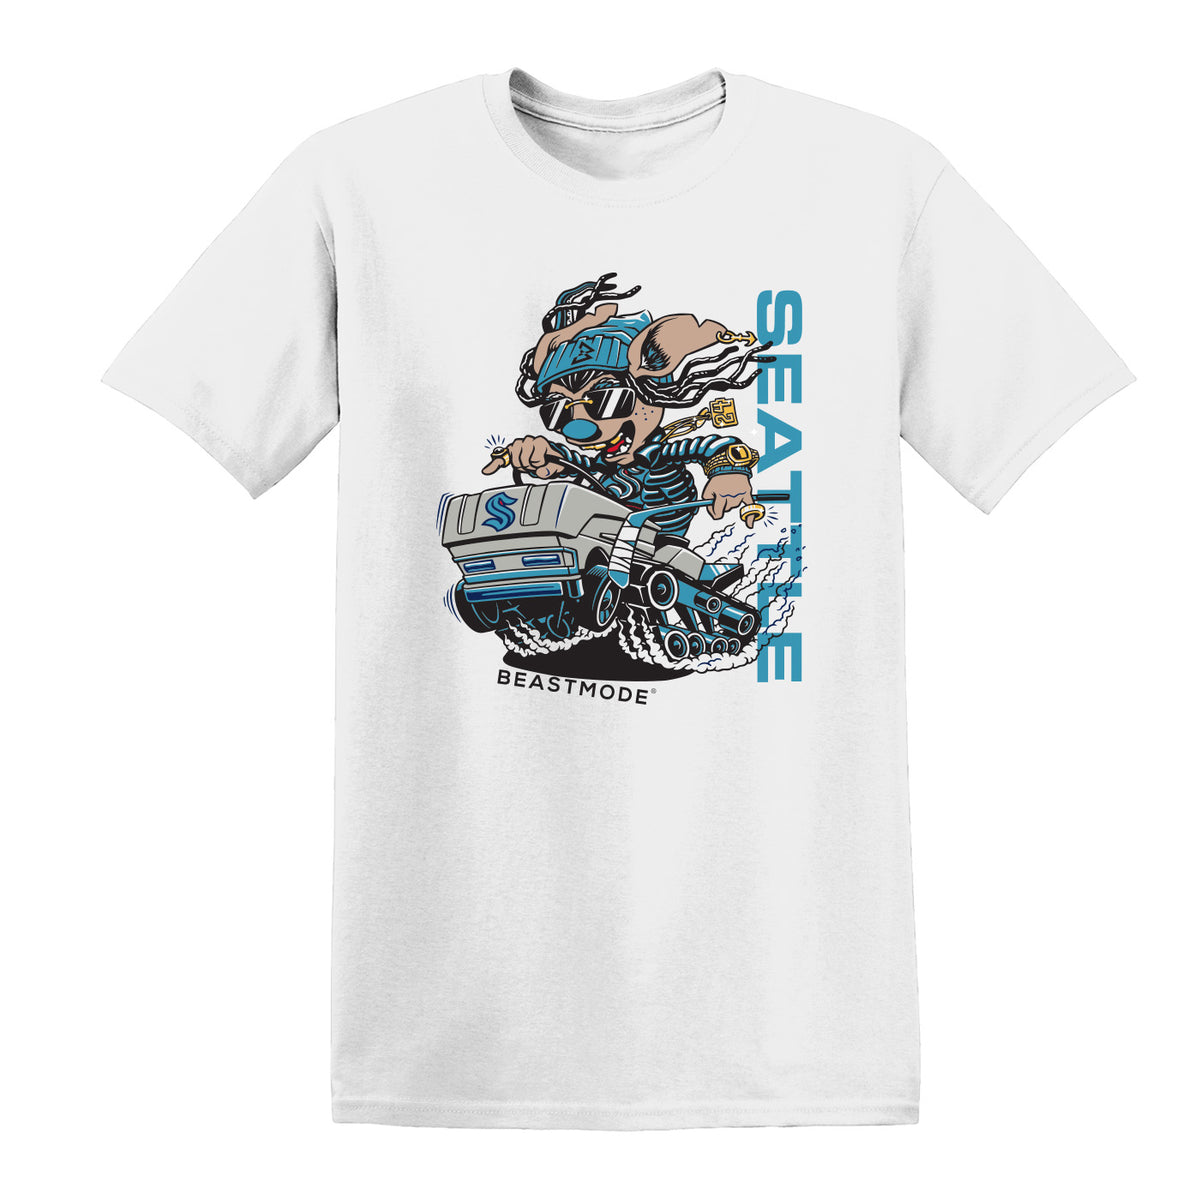 Official Nhl Seattle Kraken Fanatics Mascot Buoy T-Shirt - Sgatee